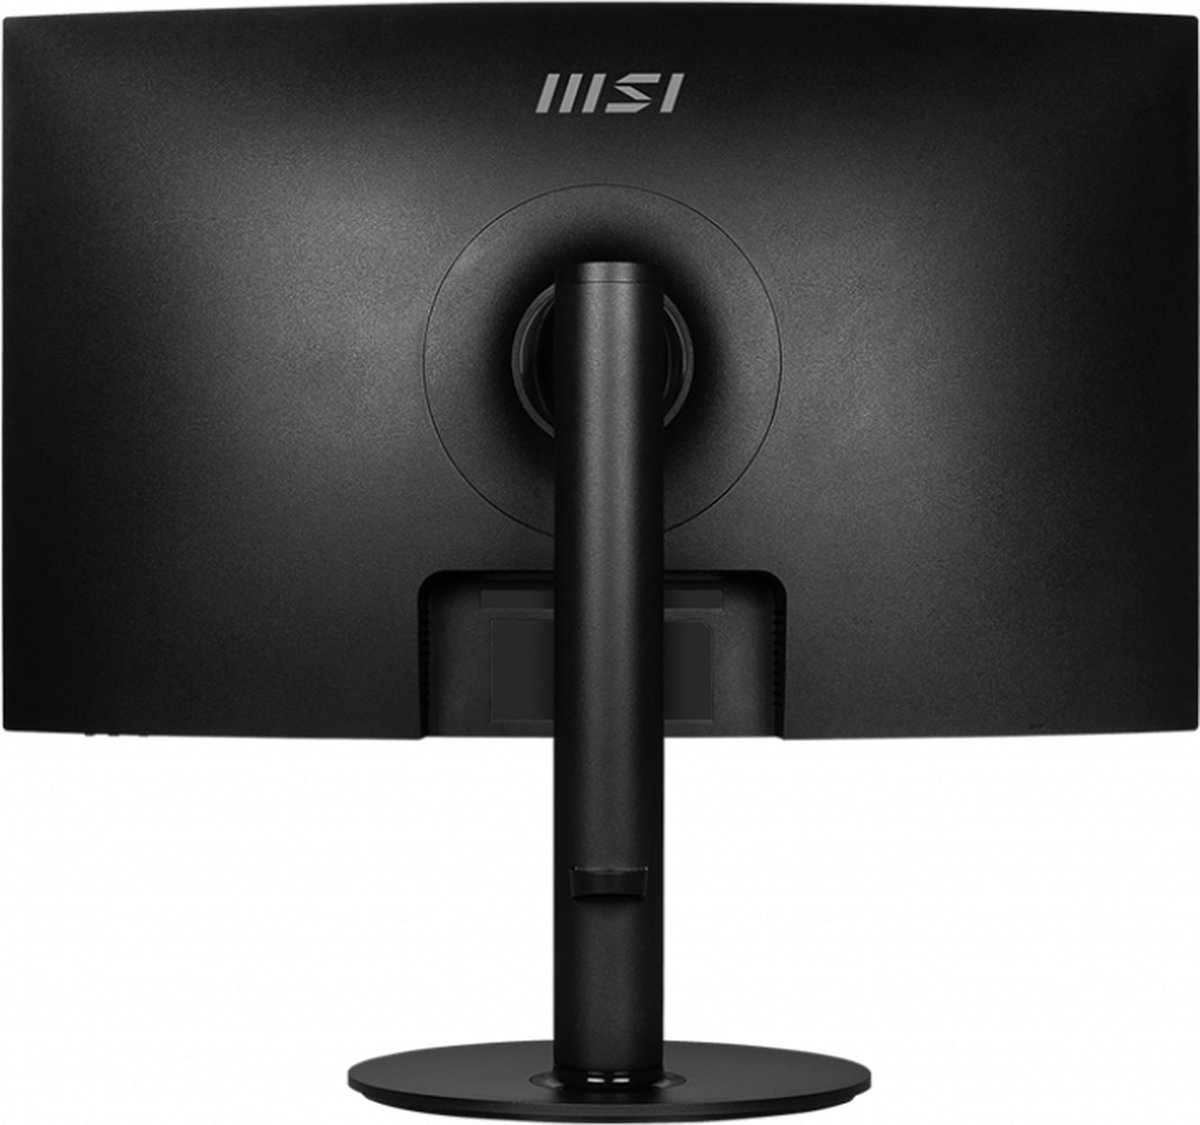 Monitor MSI MD271CP - Full HD Monitor - 27 Inch